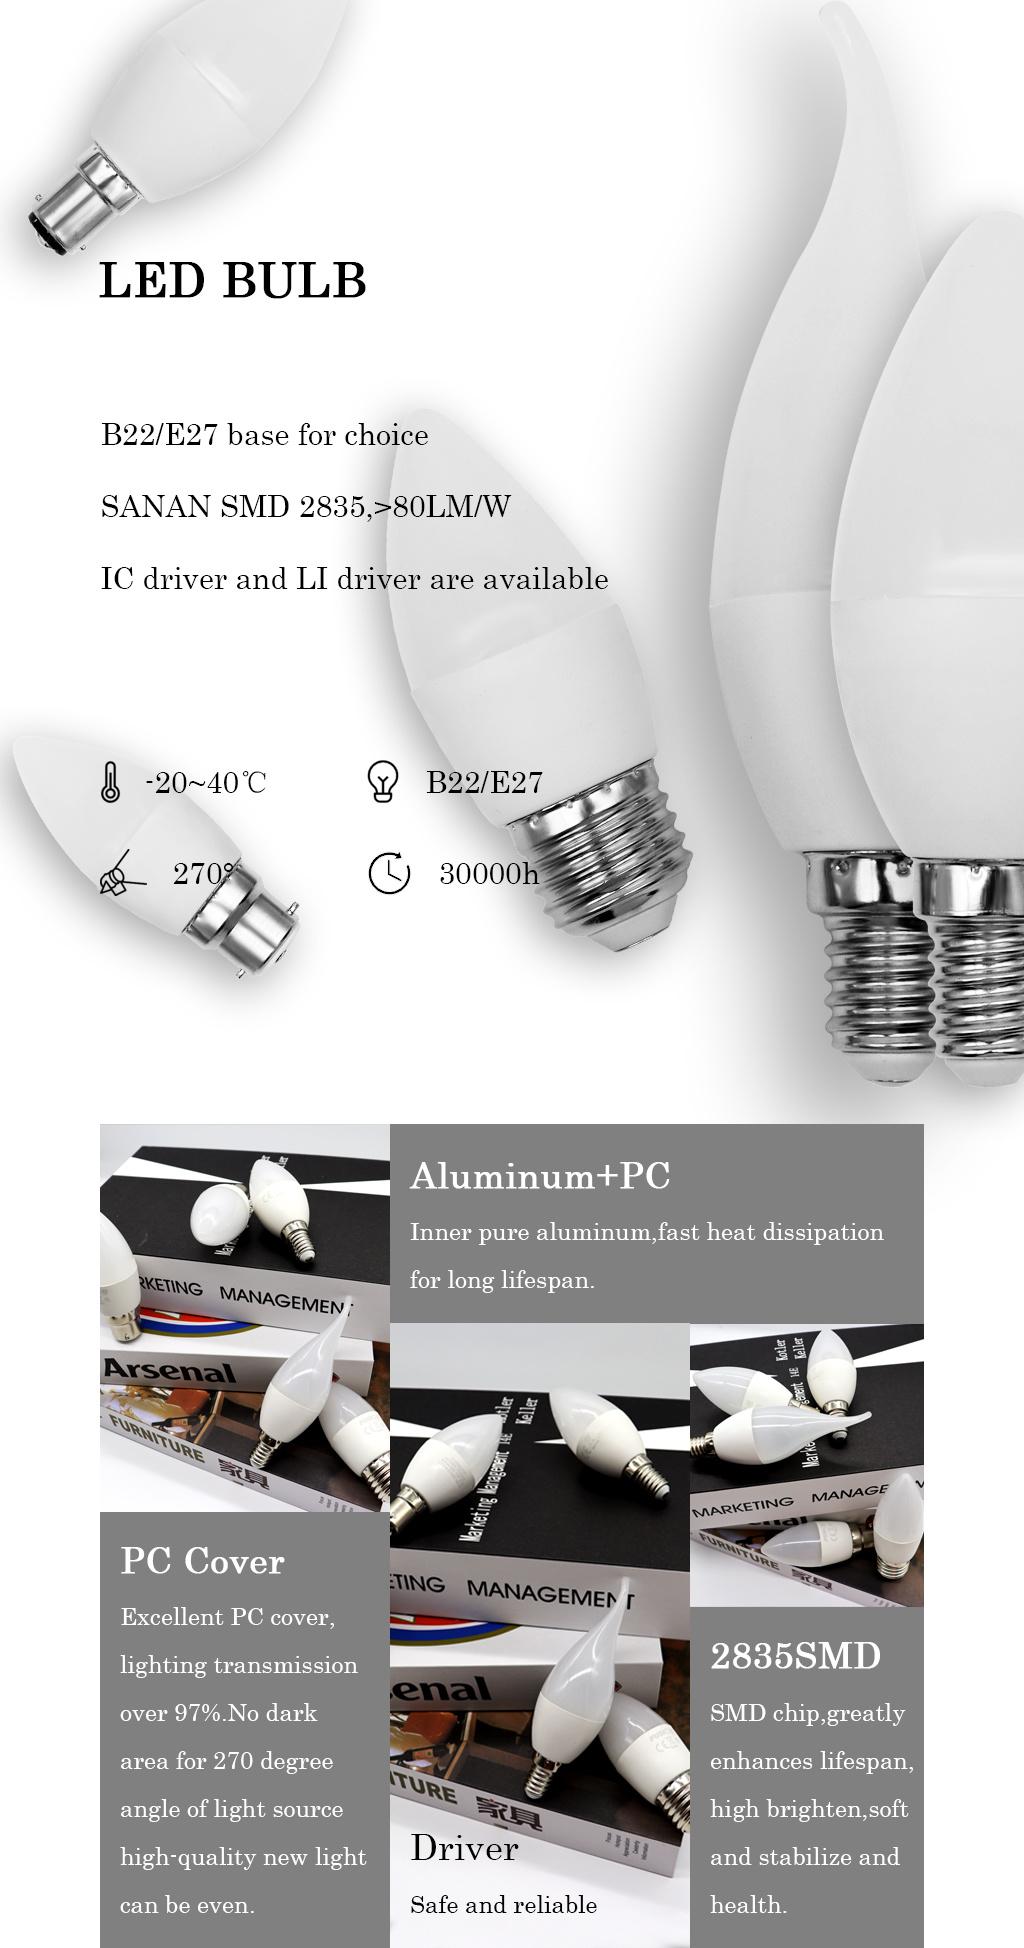 China Manufacturer Factory New ERP High Lumen E27/E14 C37 LED Light Candle Bulb